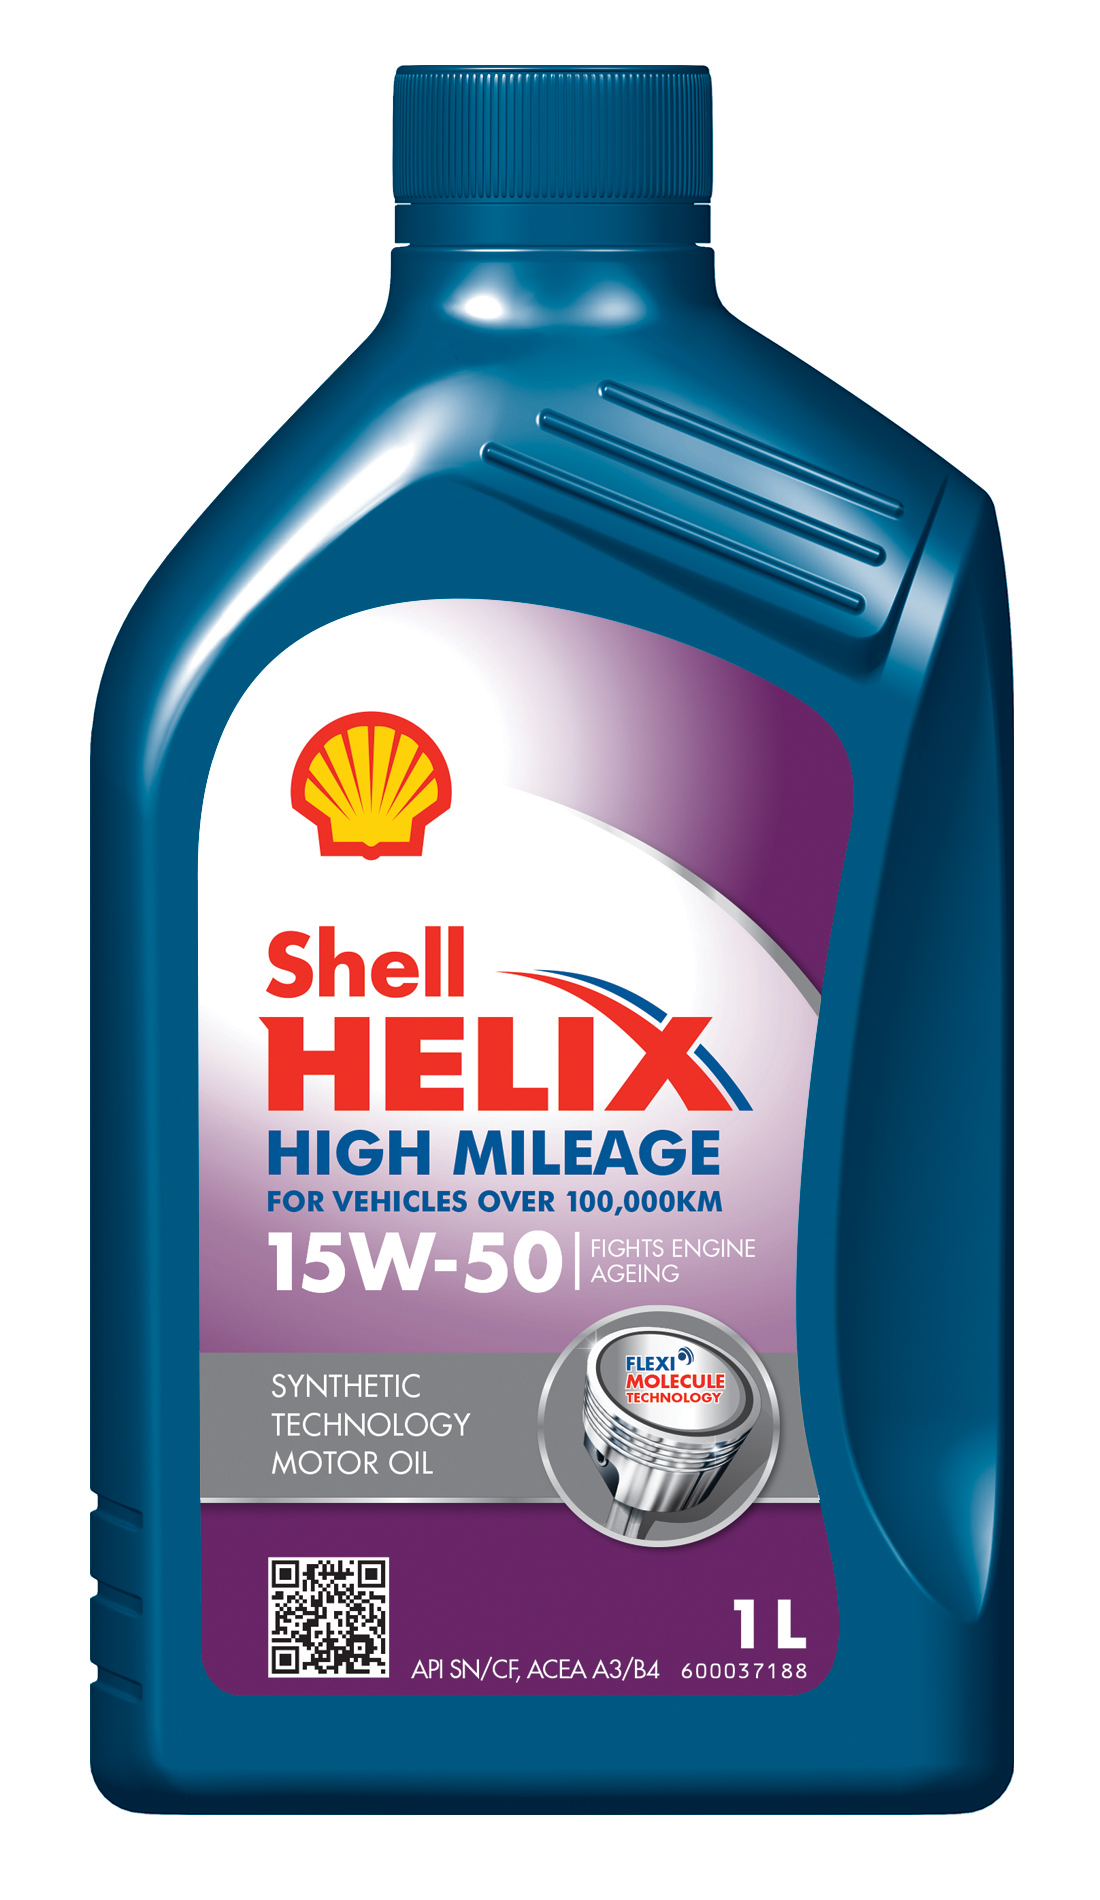 Shell high mileage. Шелл Хеликс High Mileage. Shell Helix Mileage.